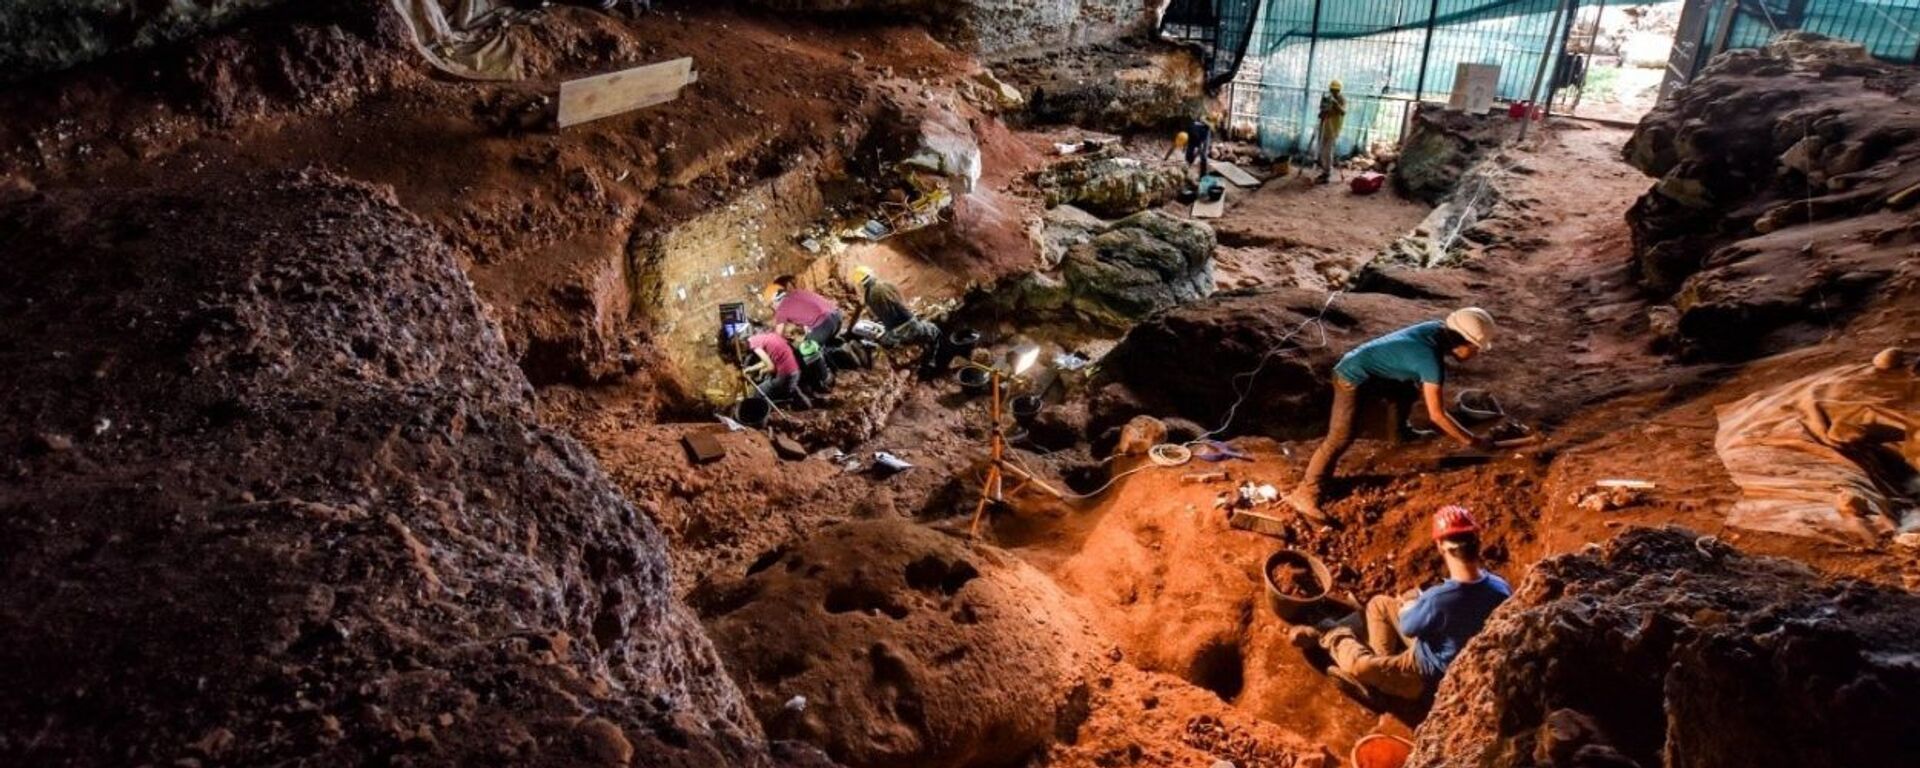 Trabalhos arqueológicos conduzidos na caverna Romanelli na Itália - Sputnik Brasil, 1920, 14.02.2022